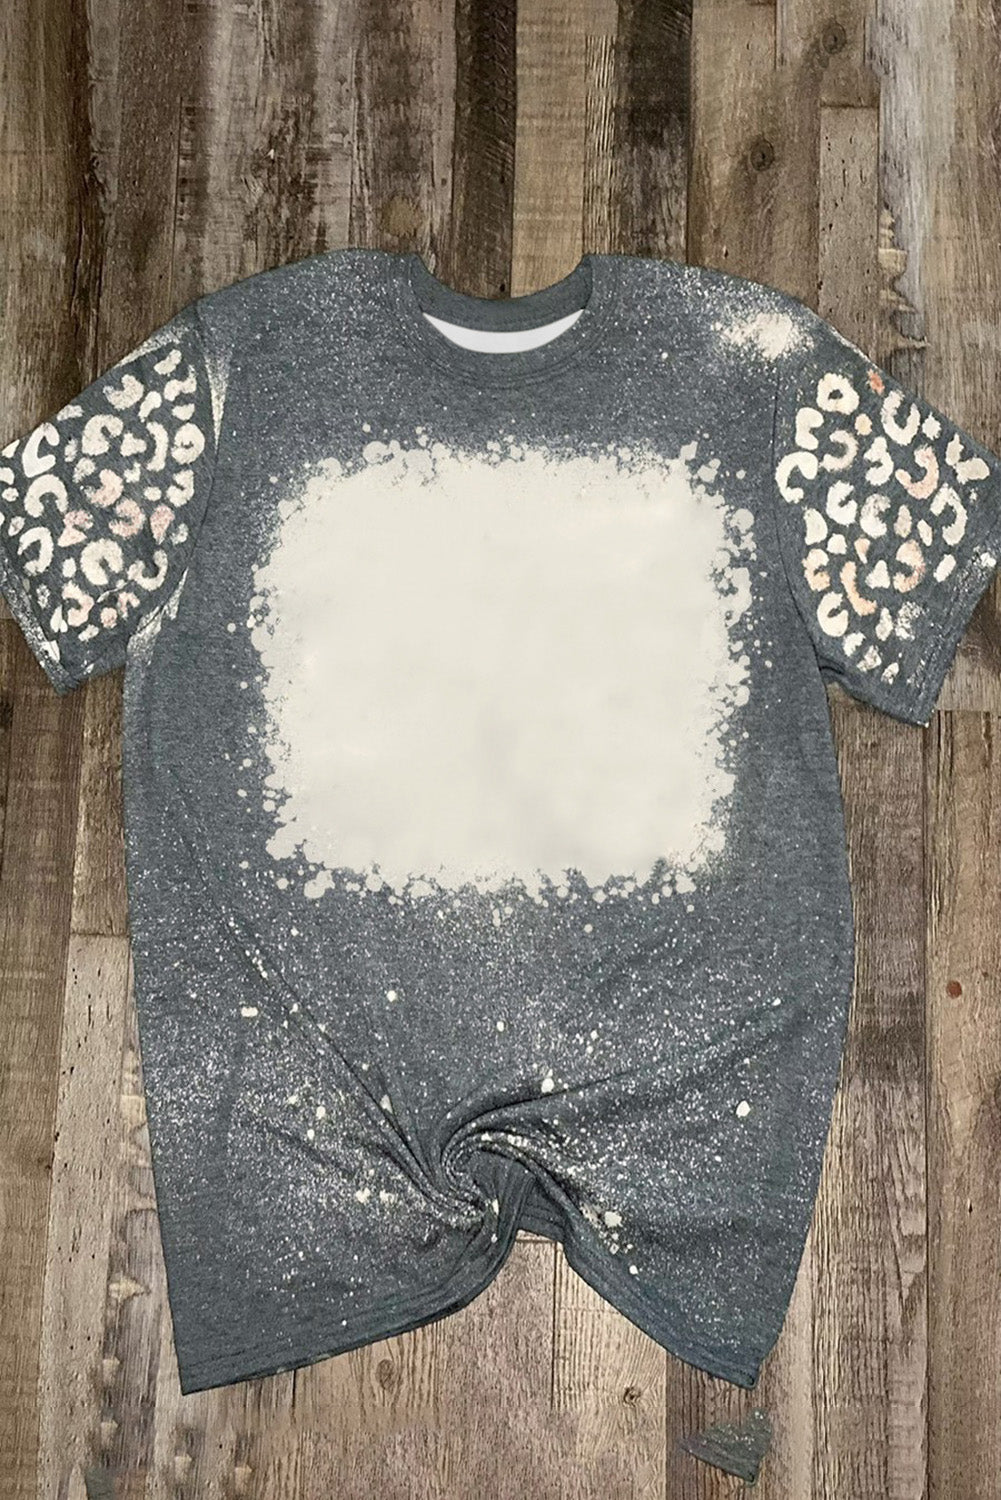 T-shirt a maniche corte leopardata grigia sbiancata